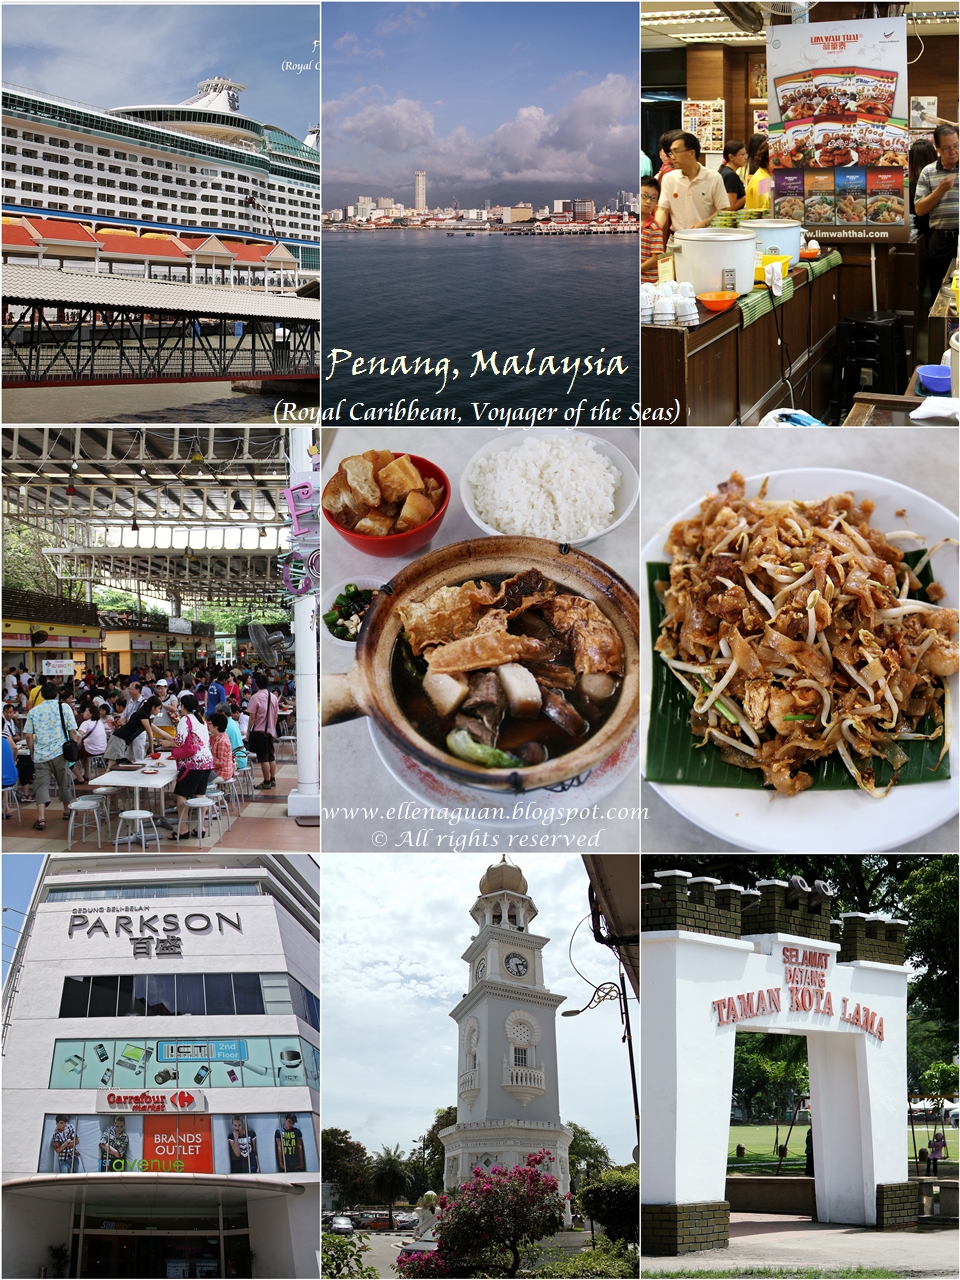 Cuisine Paradise | Eat, Shop And Travel: November 2012